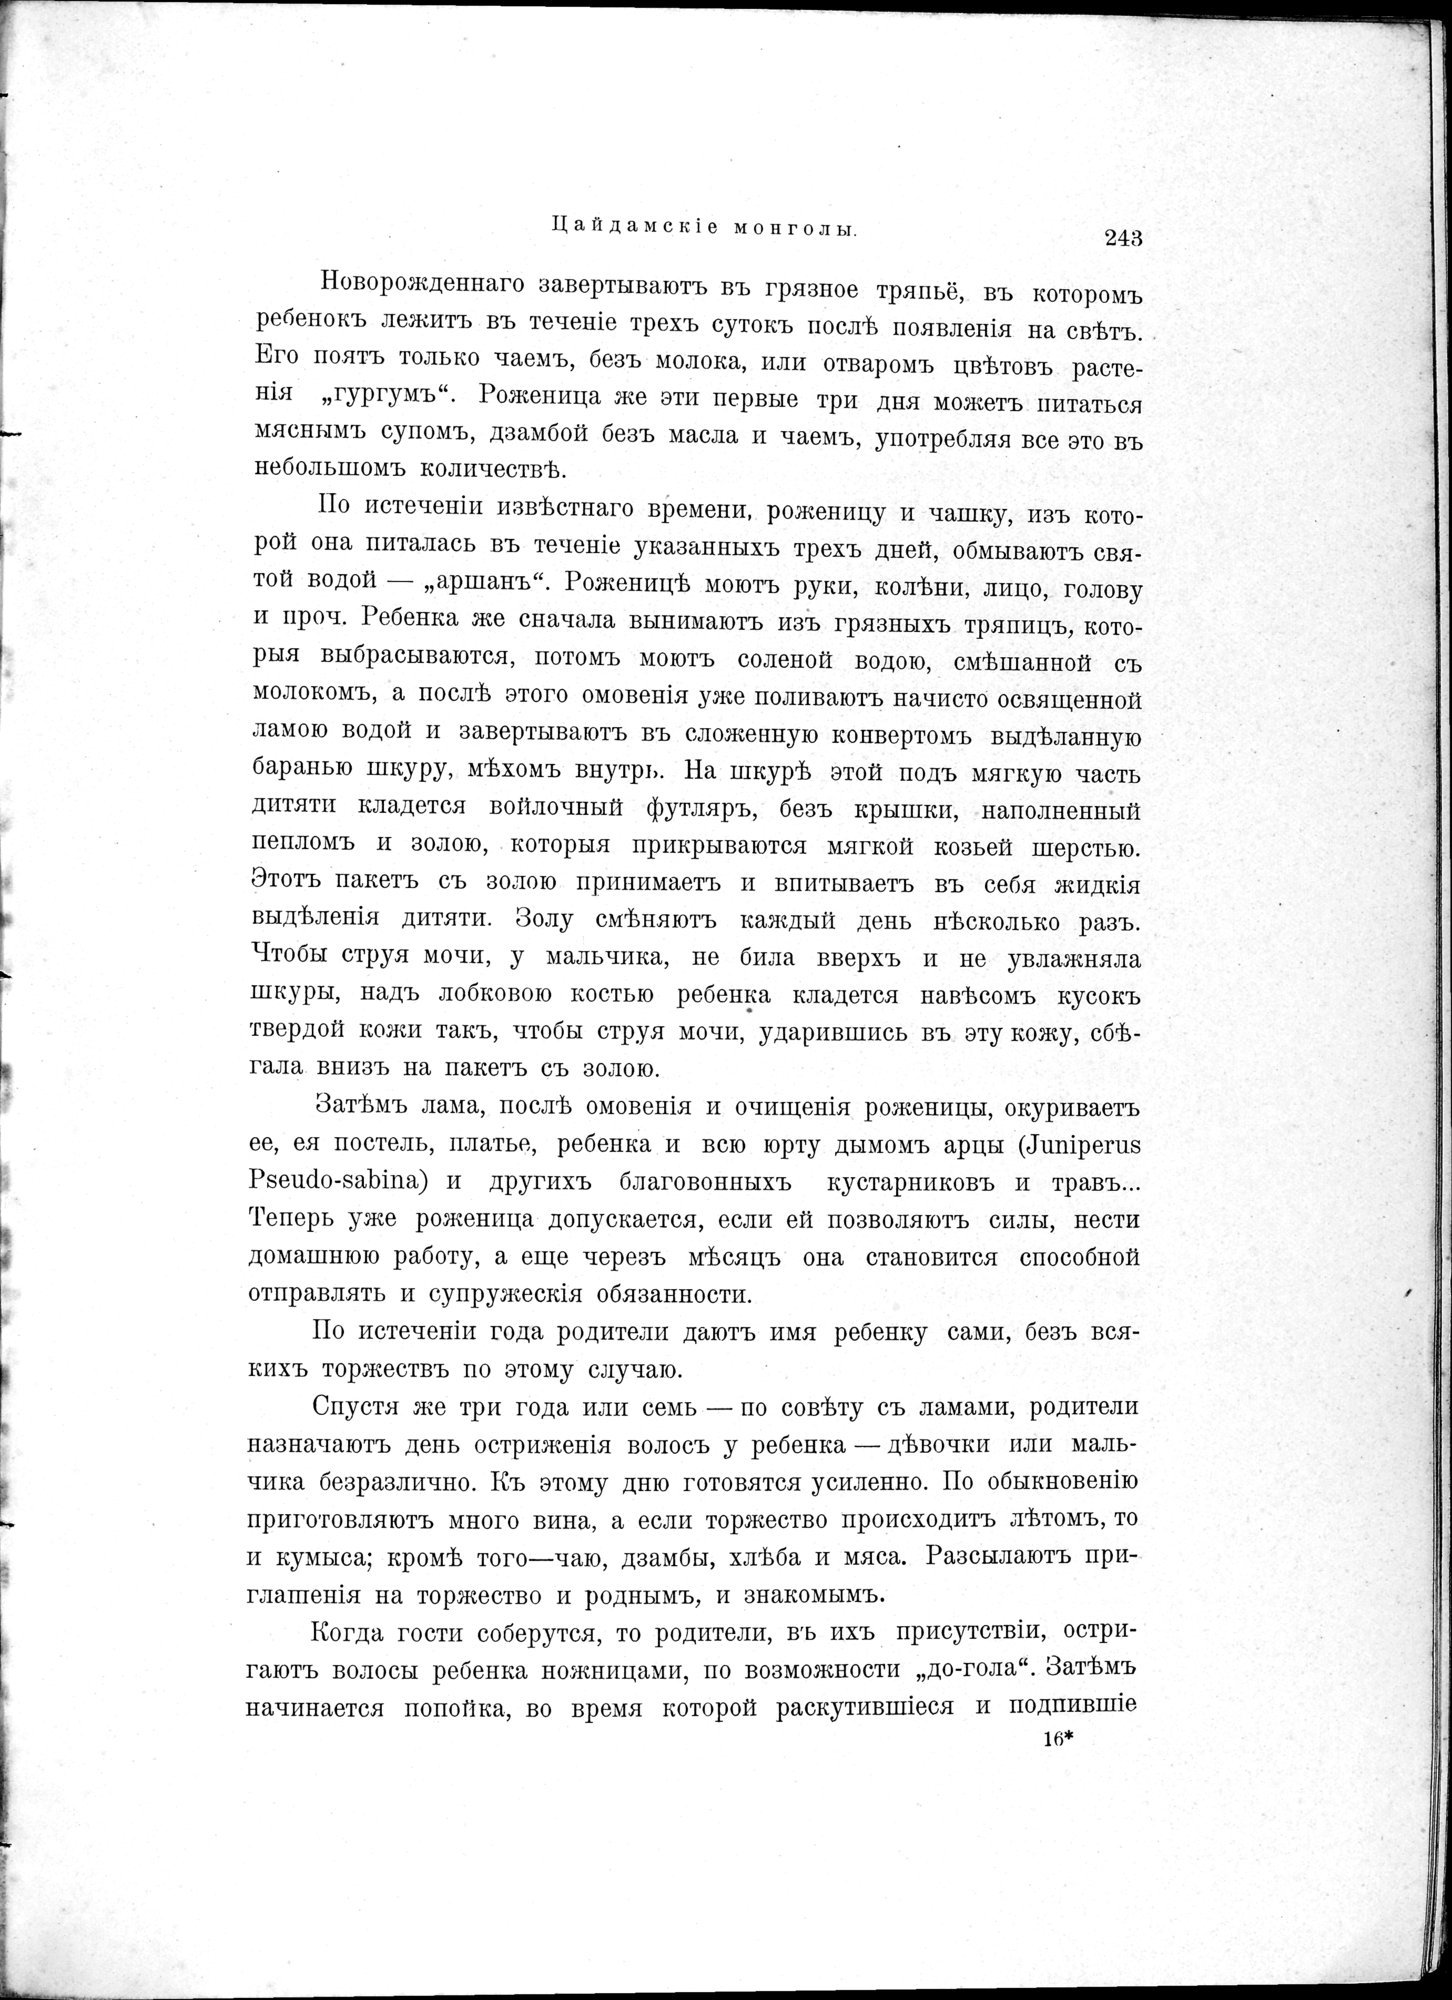 Mongoliia i Kam : vol.1 / Page 295 (Grayscale High Resolution Image)